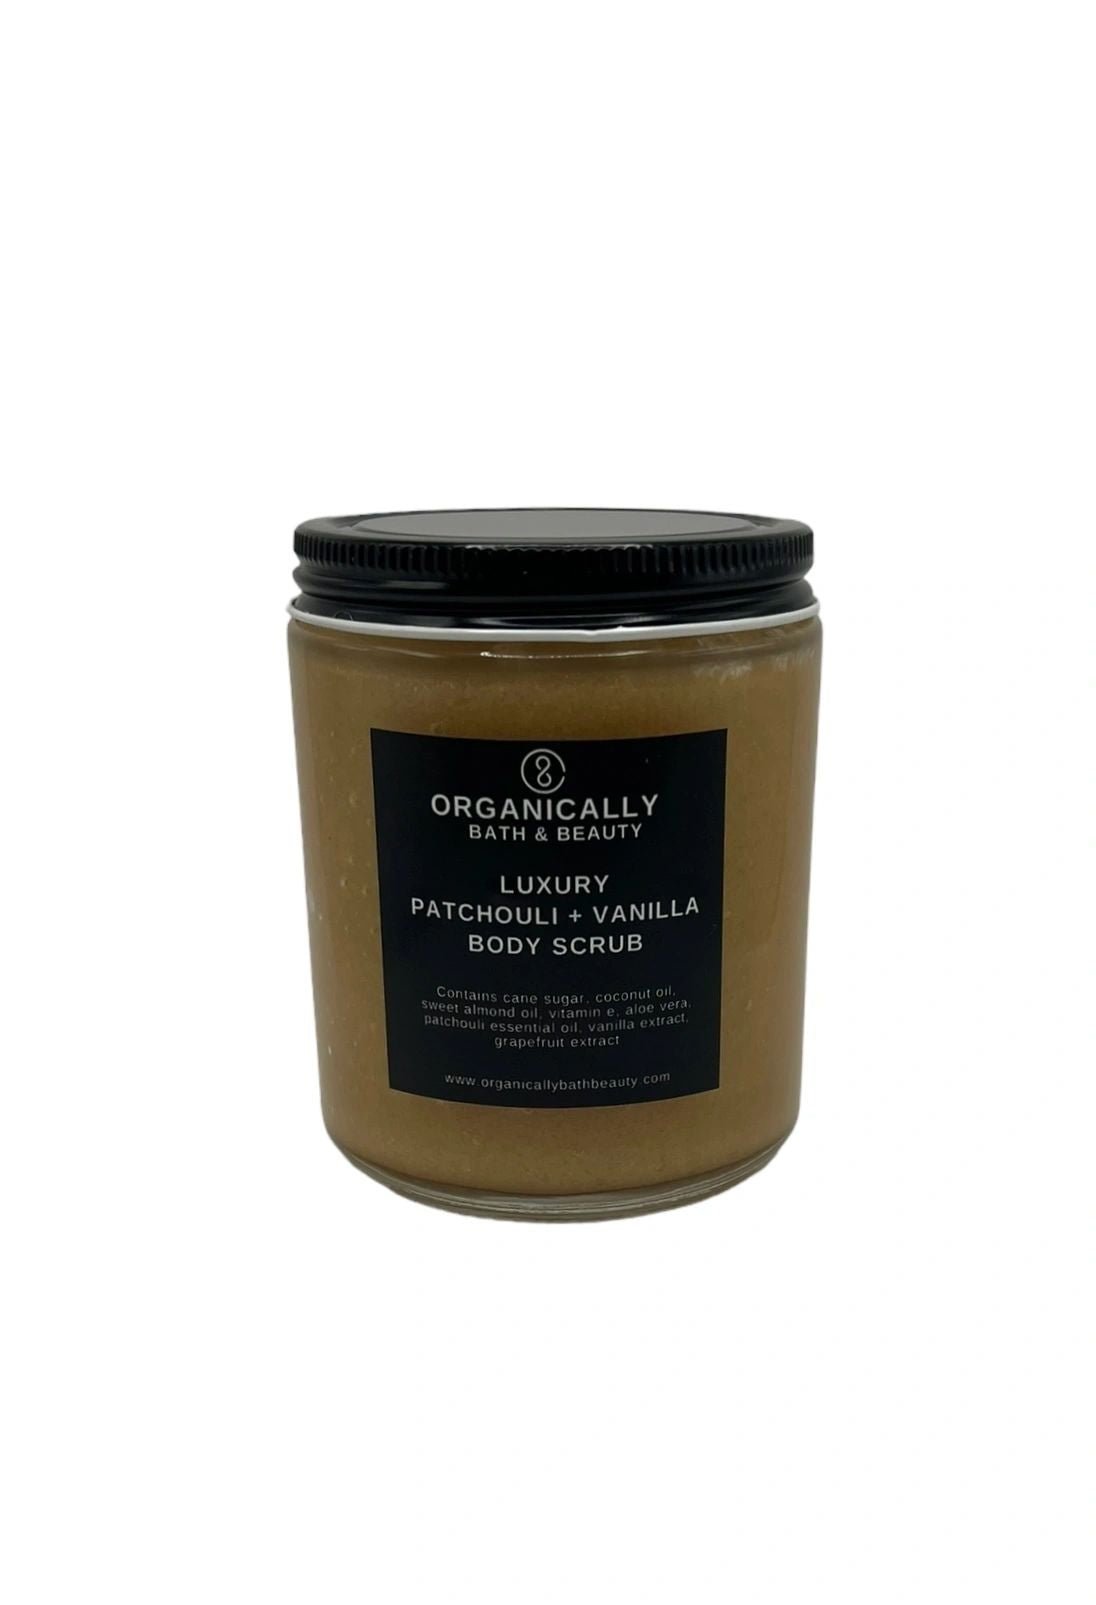 Patchouli + Vanilla Luxury Body Scrub - Organically Bath & Beauty